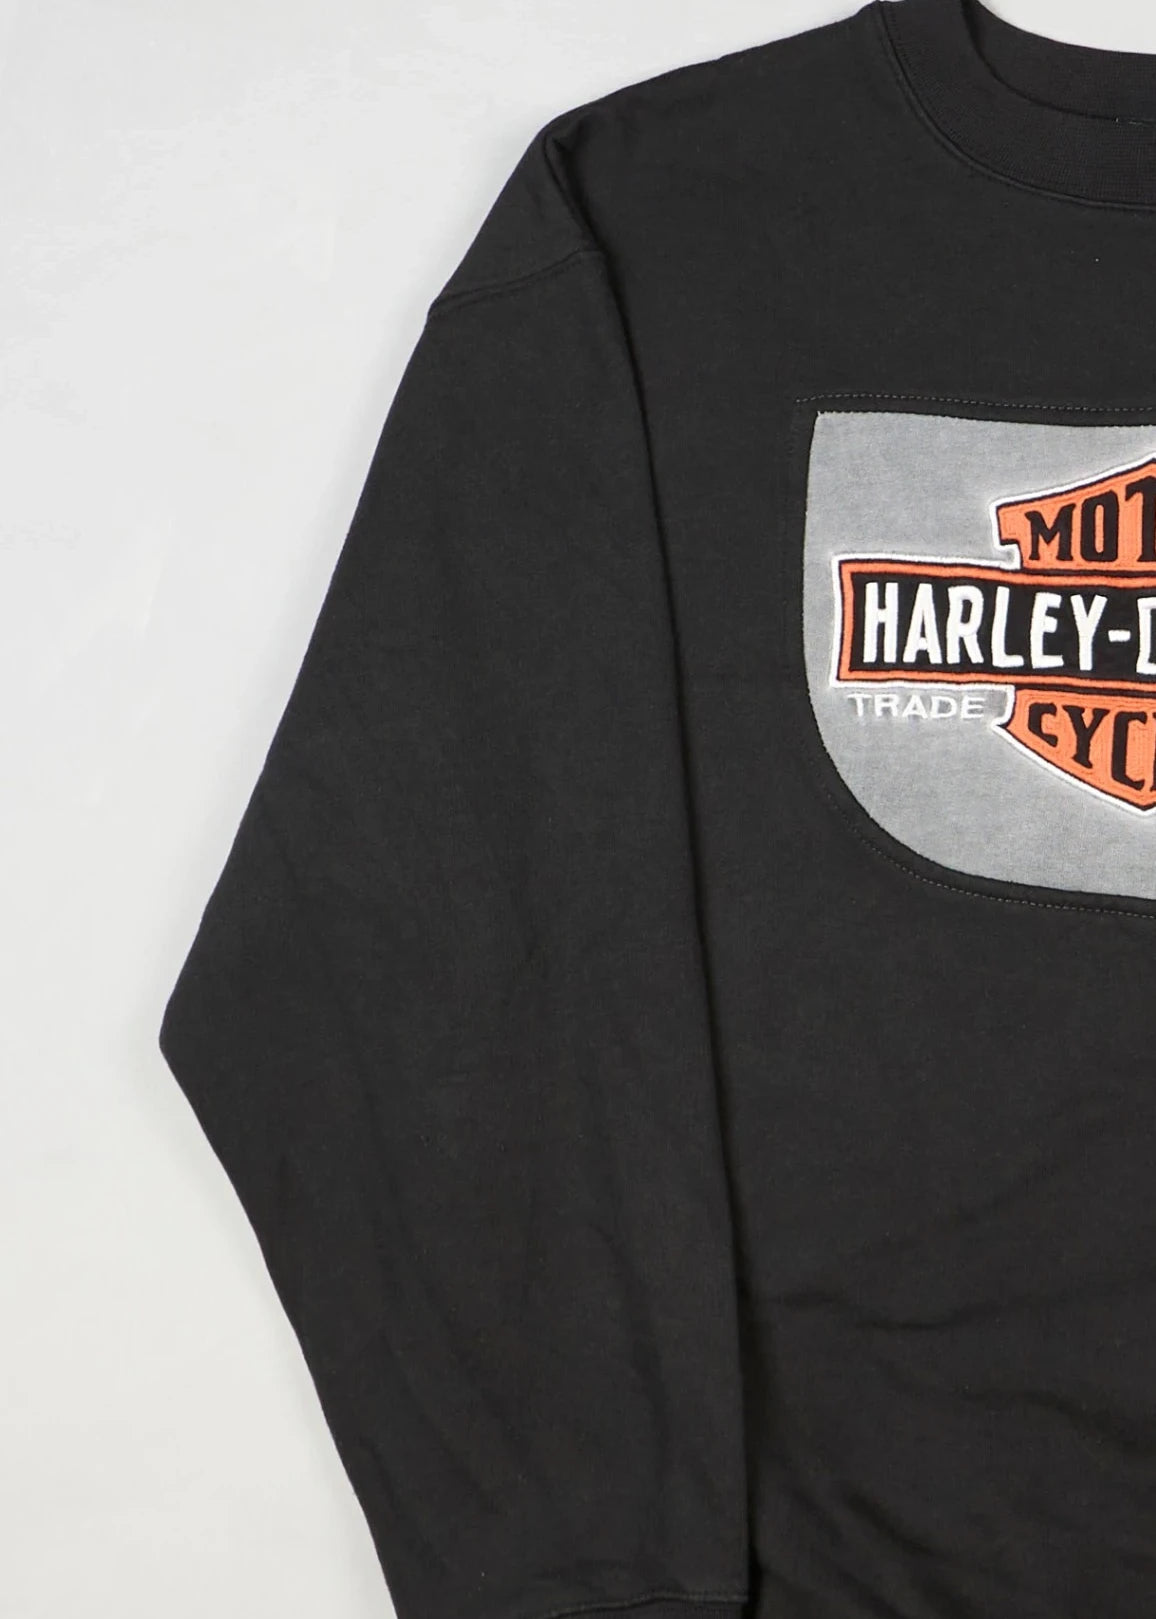 Harley Davidson - Sweatshirt (L) Left